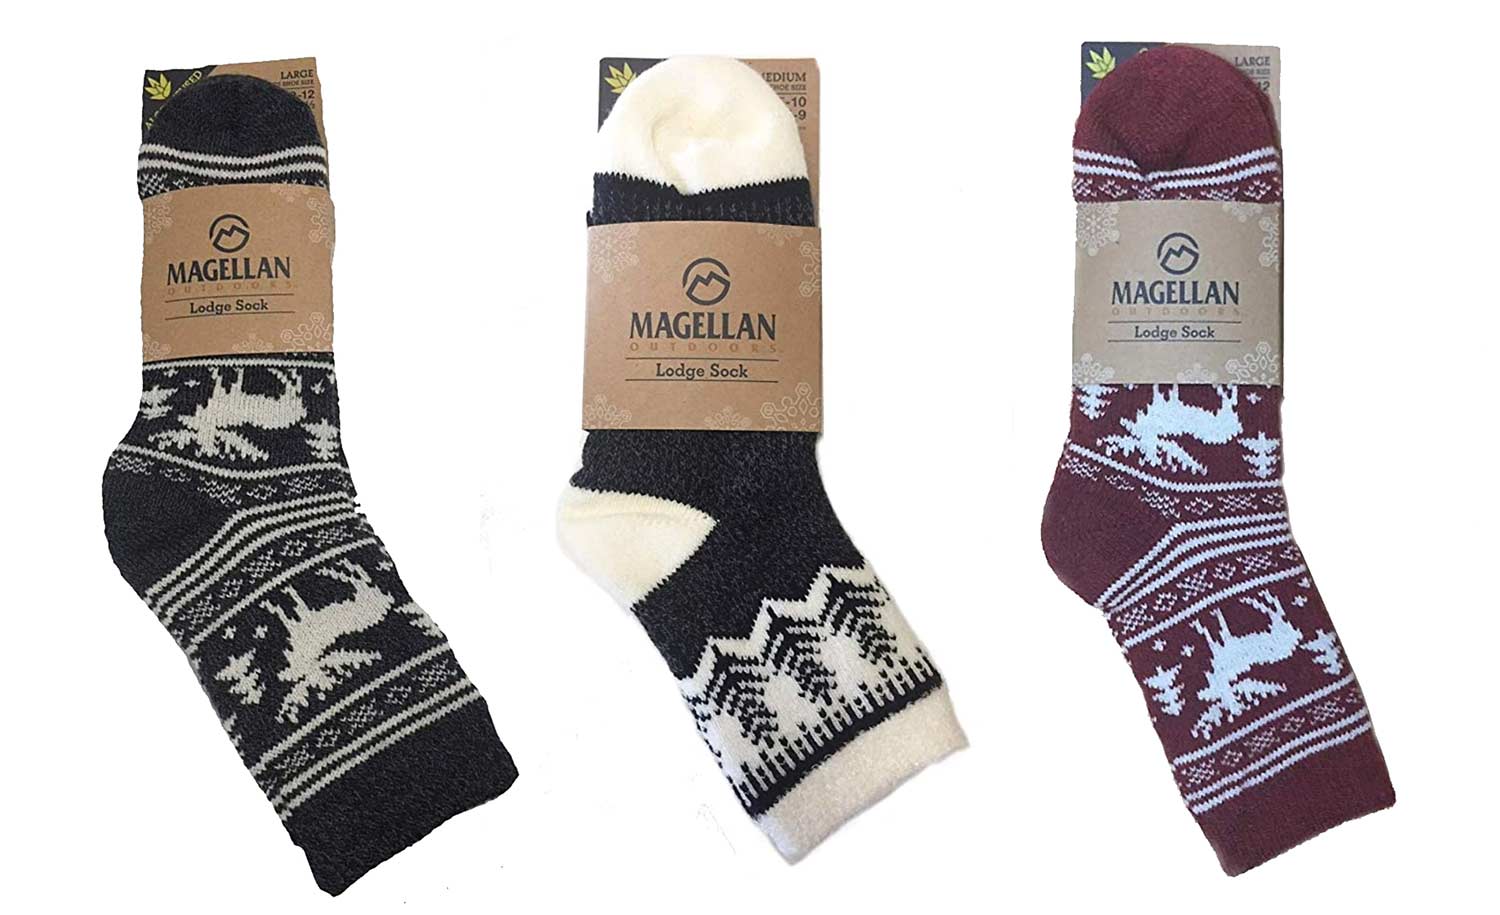 Magellan Outdoors Lodge Socks